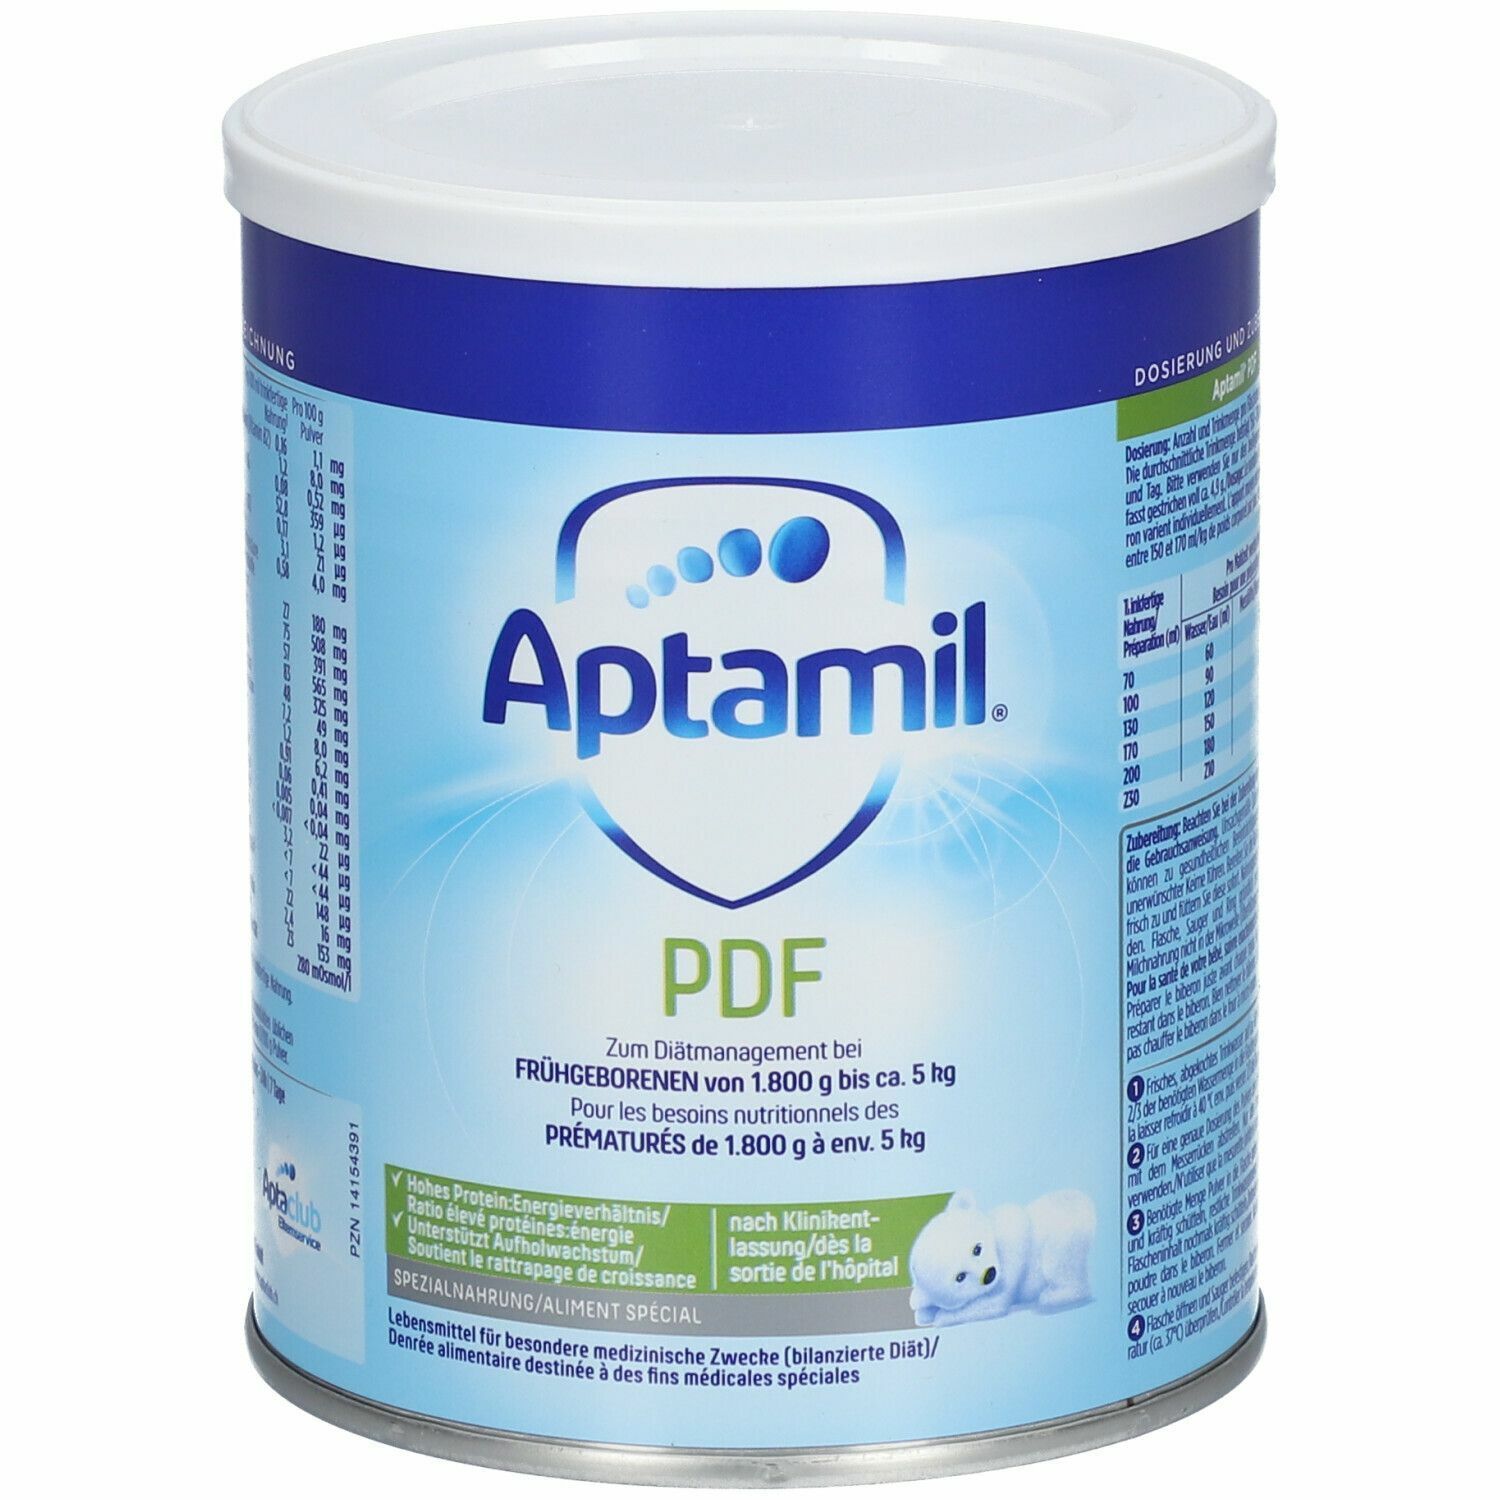 Aptamil® PDF